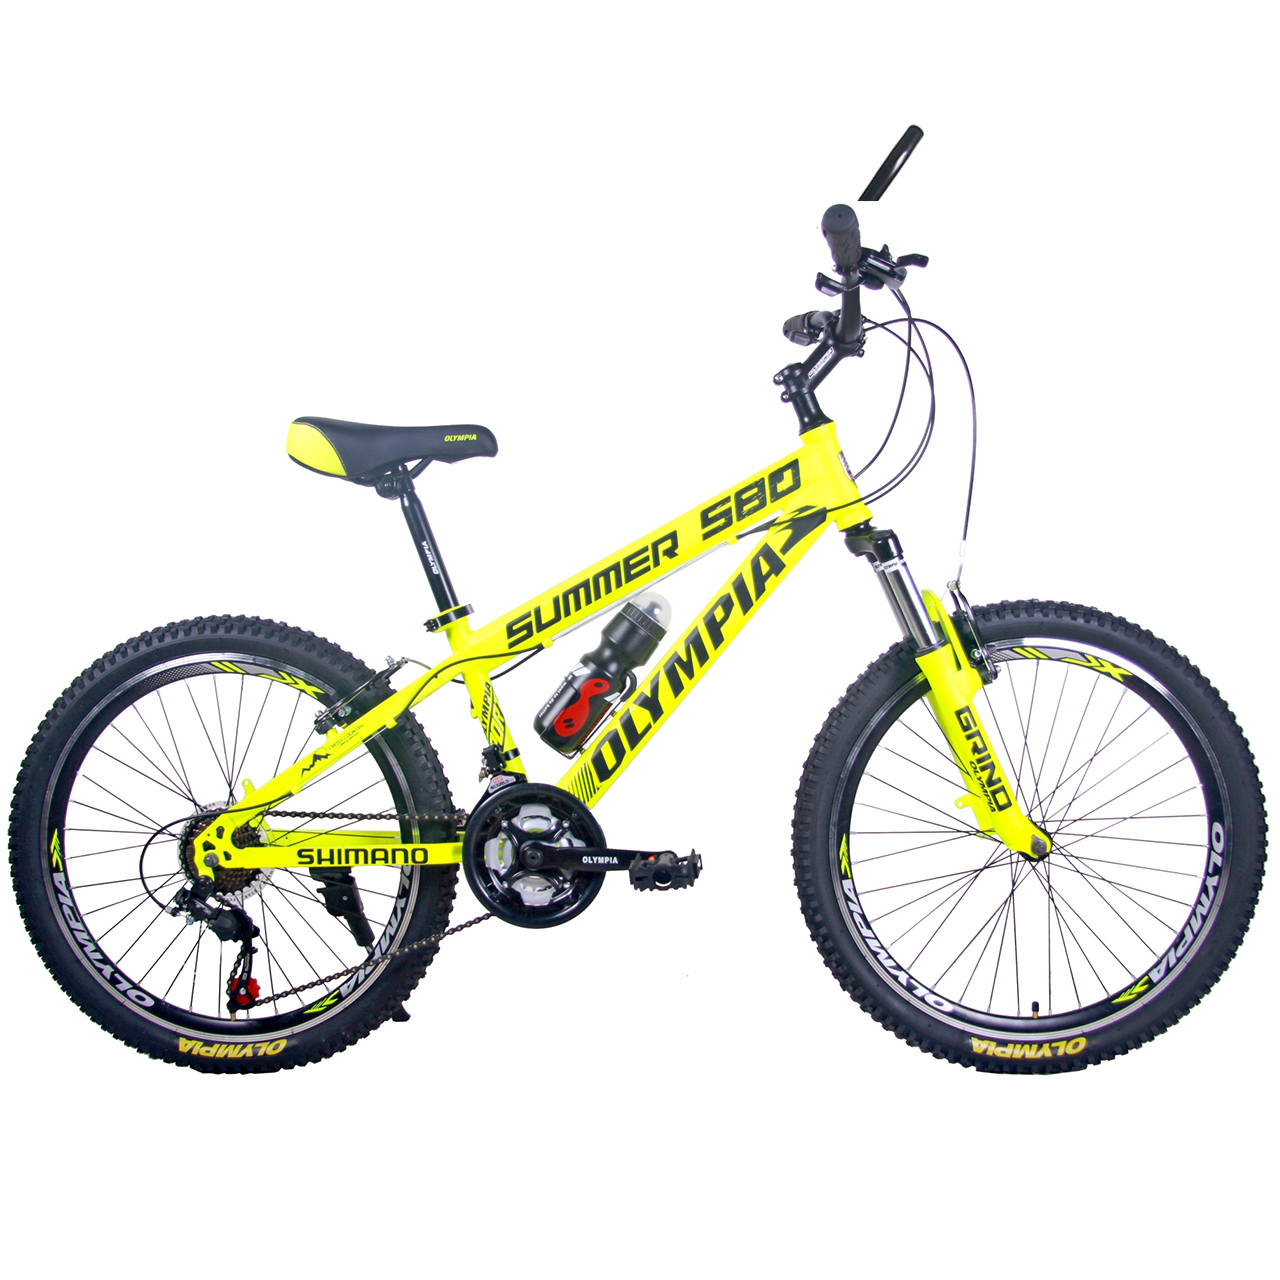 دوچرخه کوهستان المپیا مدل Summet-S80 کد 2463 سایز 24